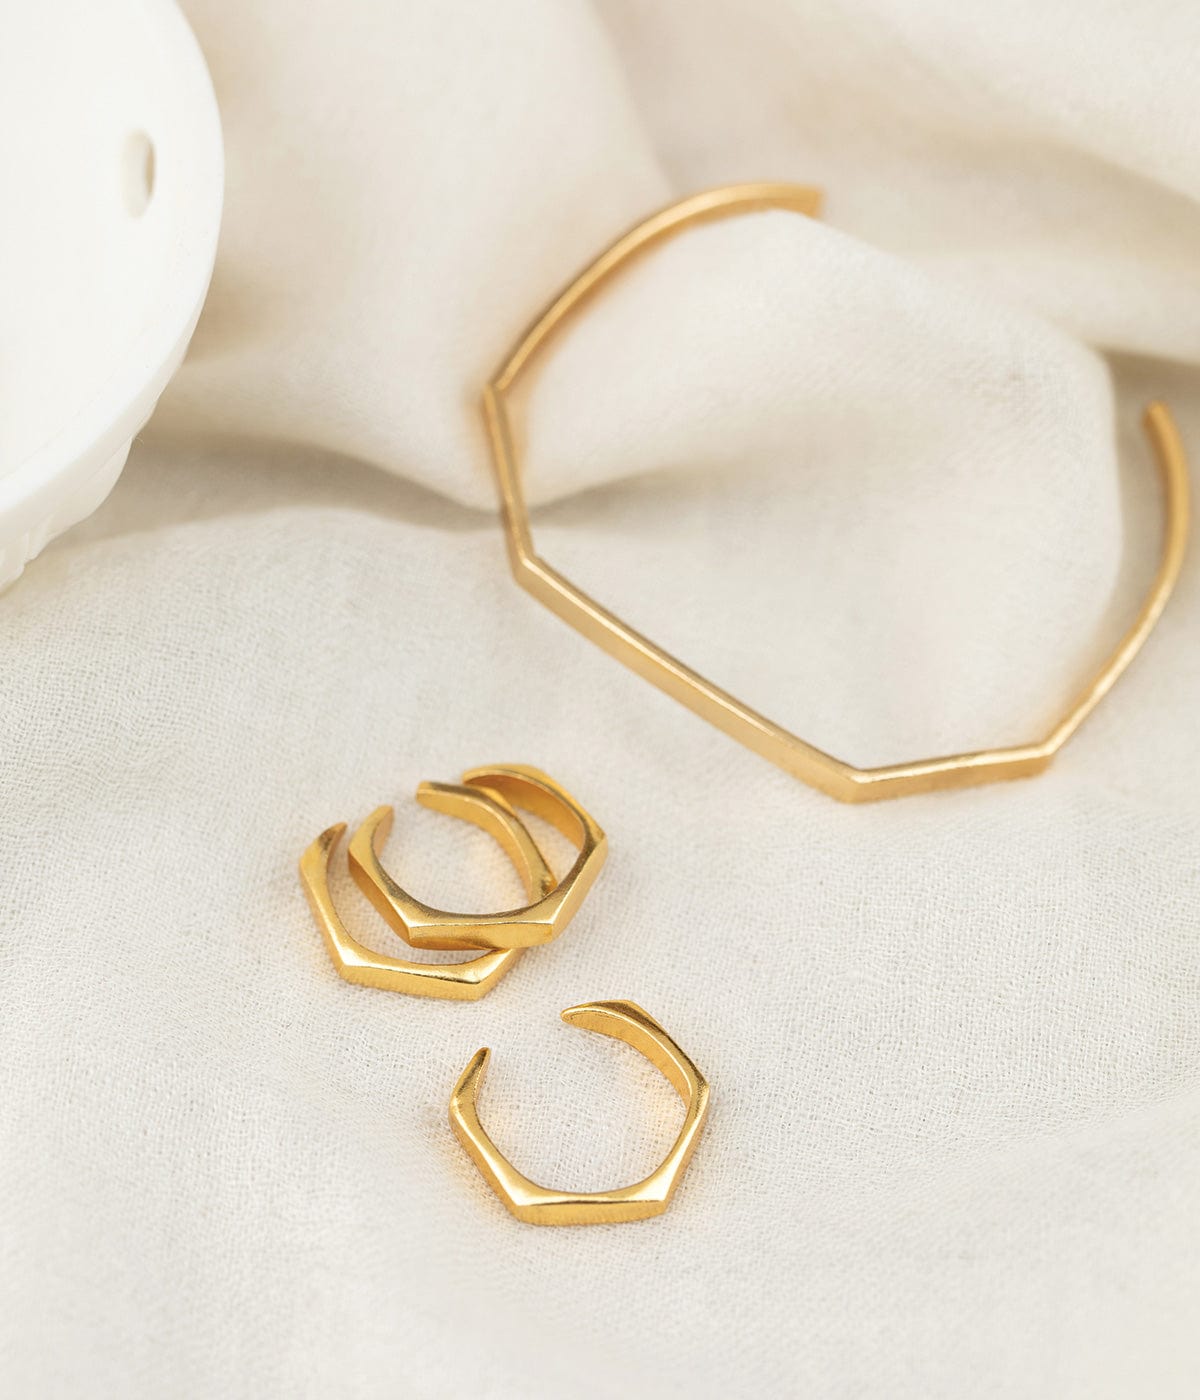 Ruhiya Adjustable 22k Gold Plated On Brass Bracelet - ZEWAR Jewelry